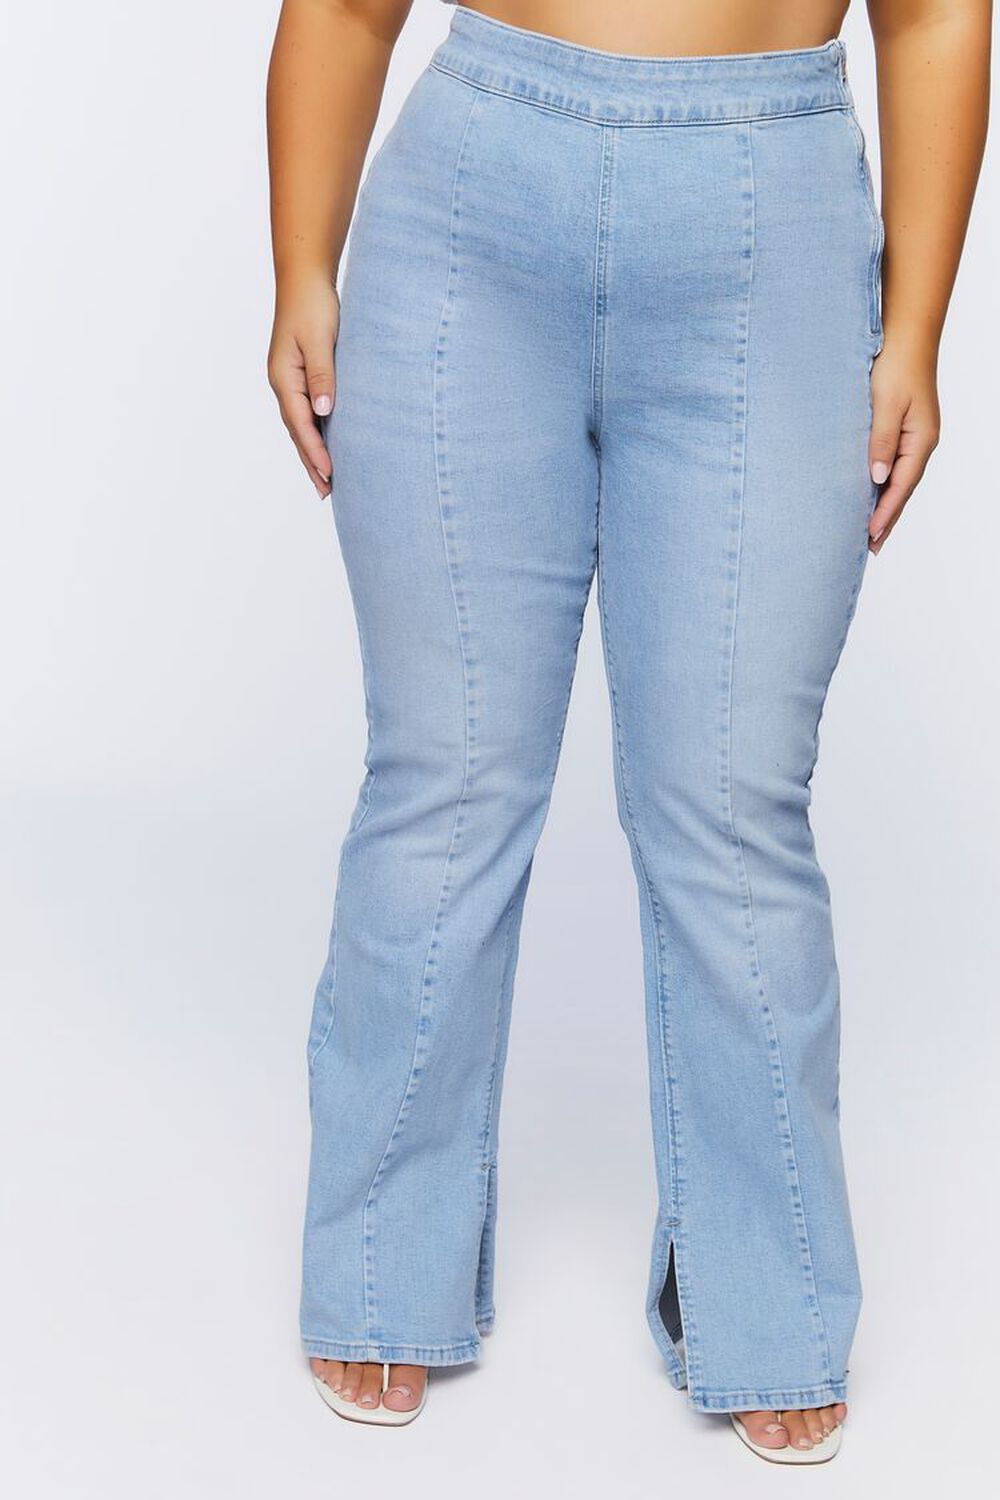 LIGHT DENIM Plus Size High-Rise Split Flare Jeans, image 3